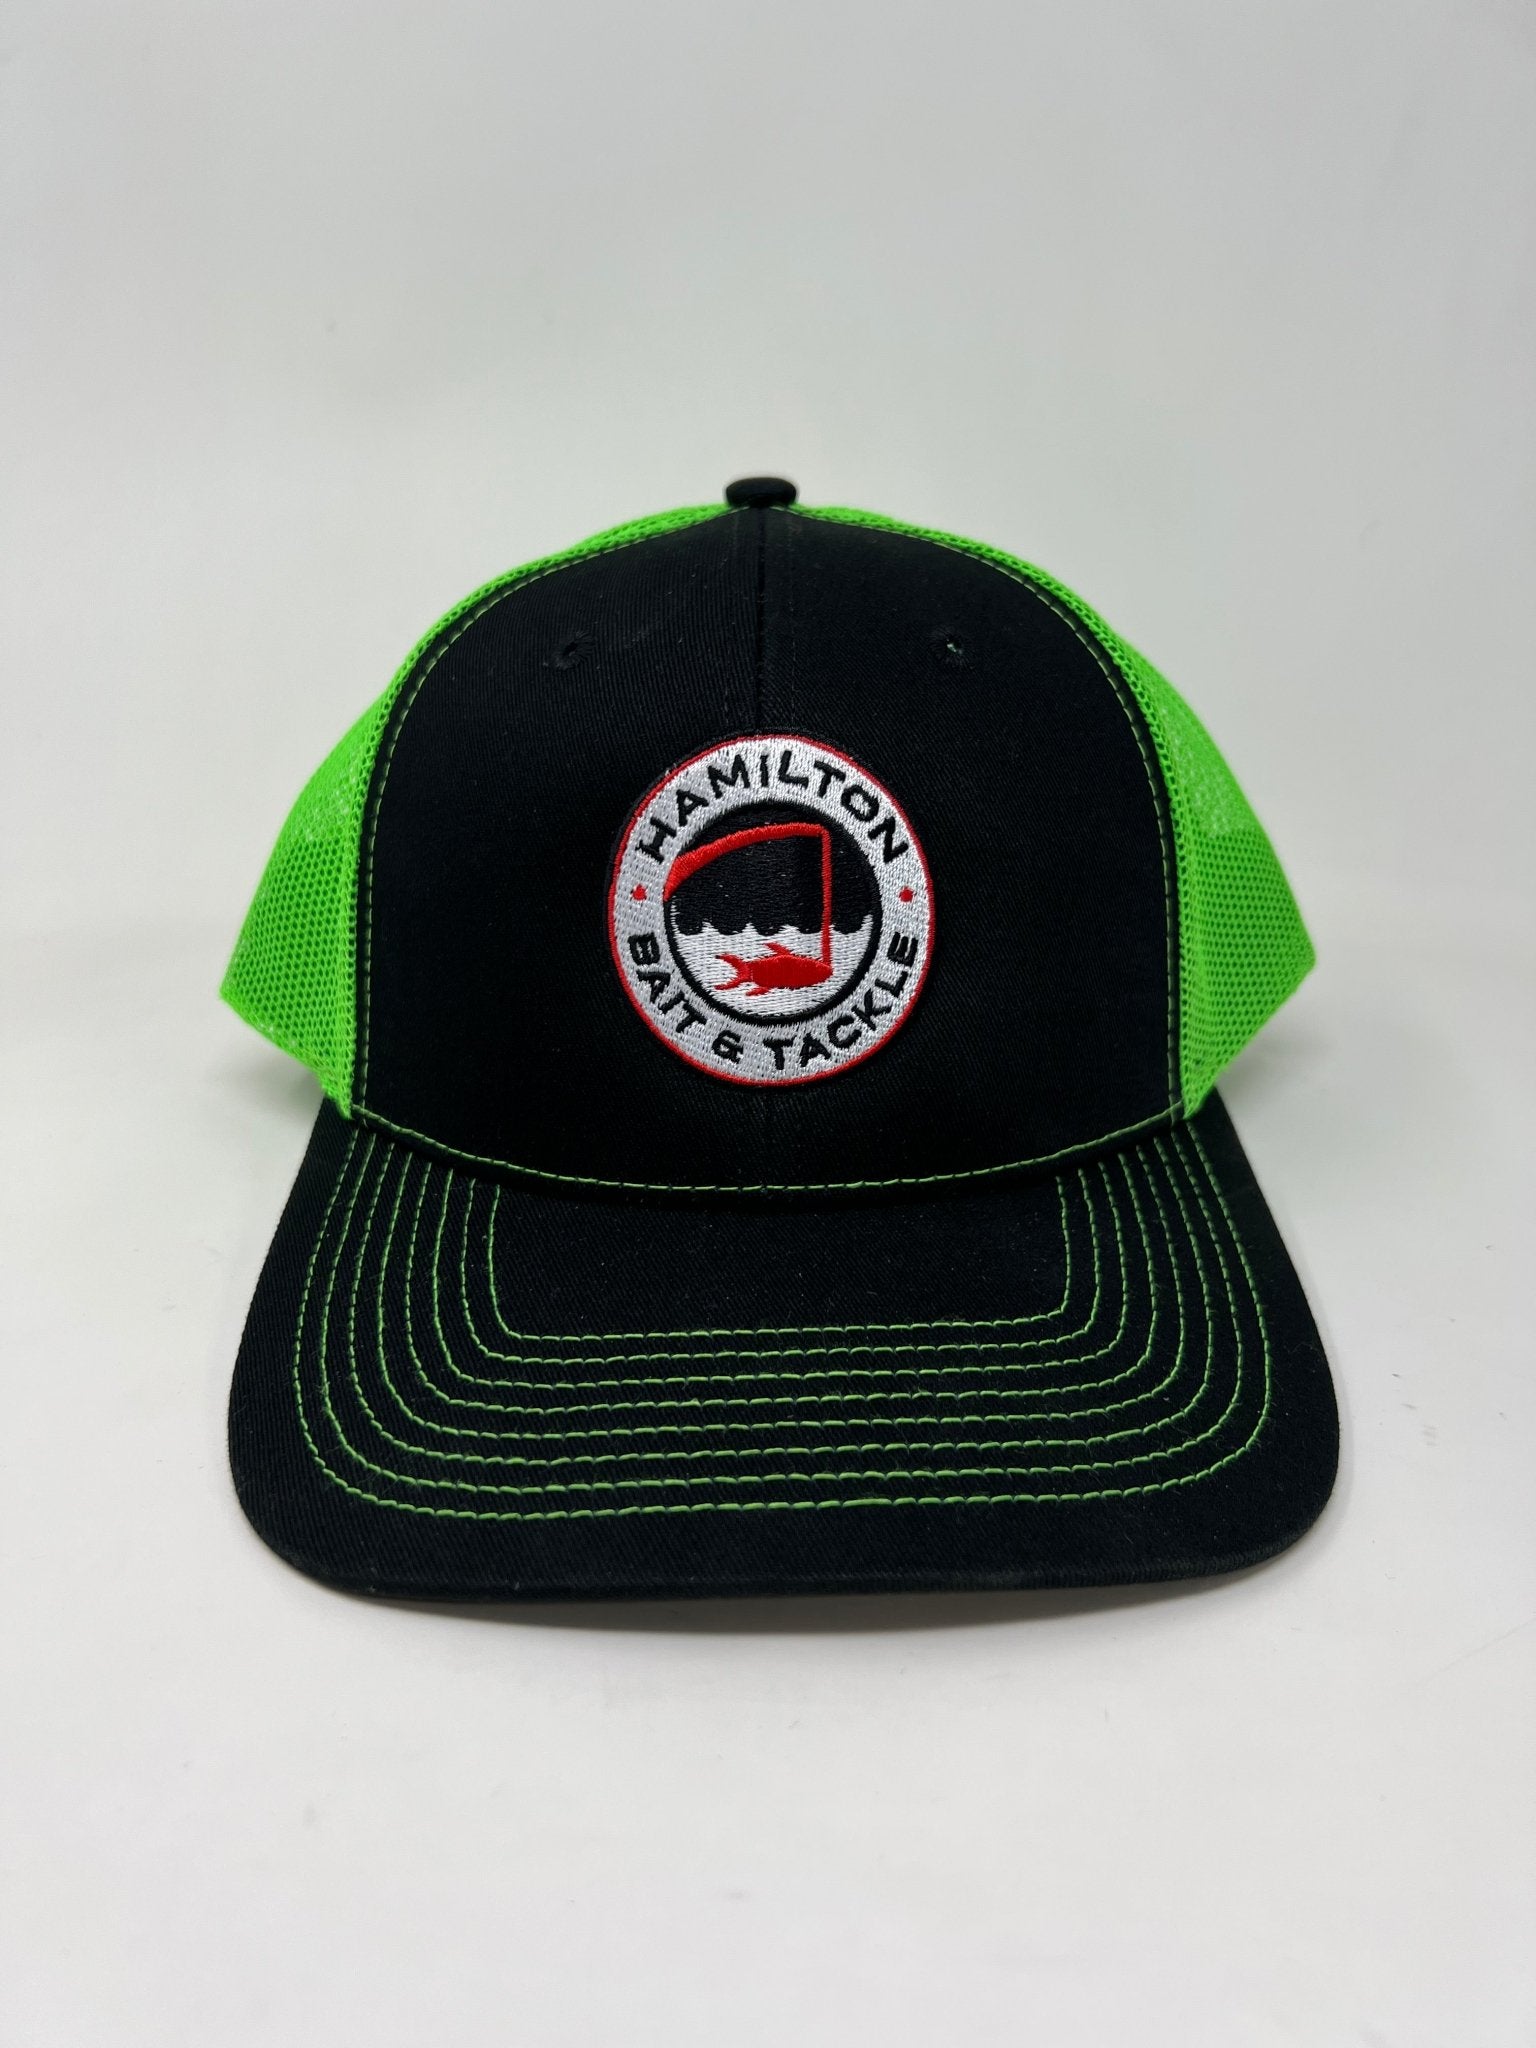 HBT Stitched Logo Hat Black/Neon Green Mesh